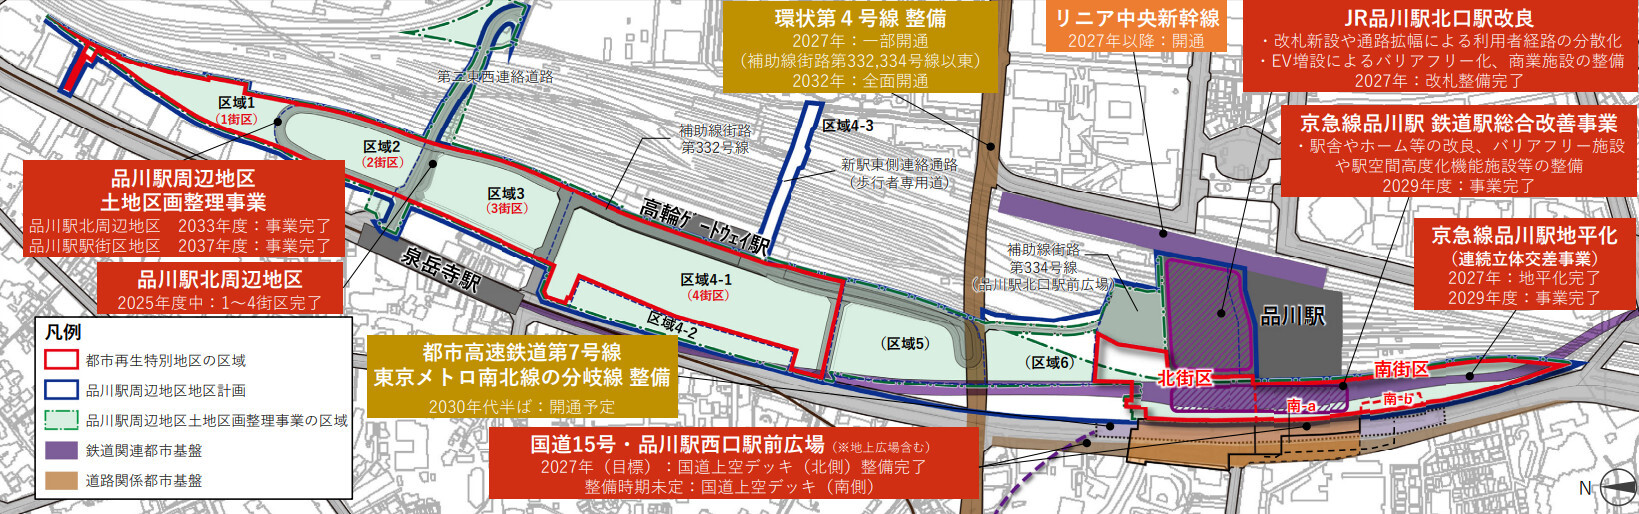 品川駅周辺の開発・整備計画